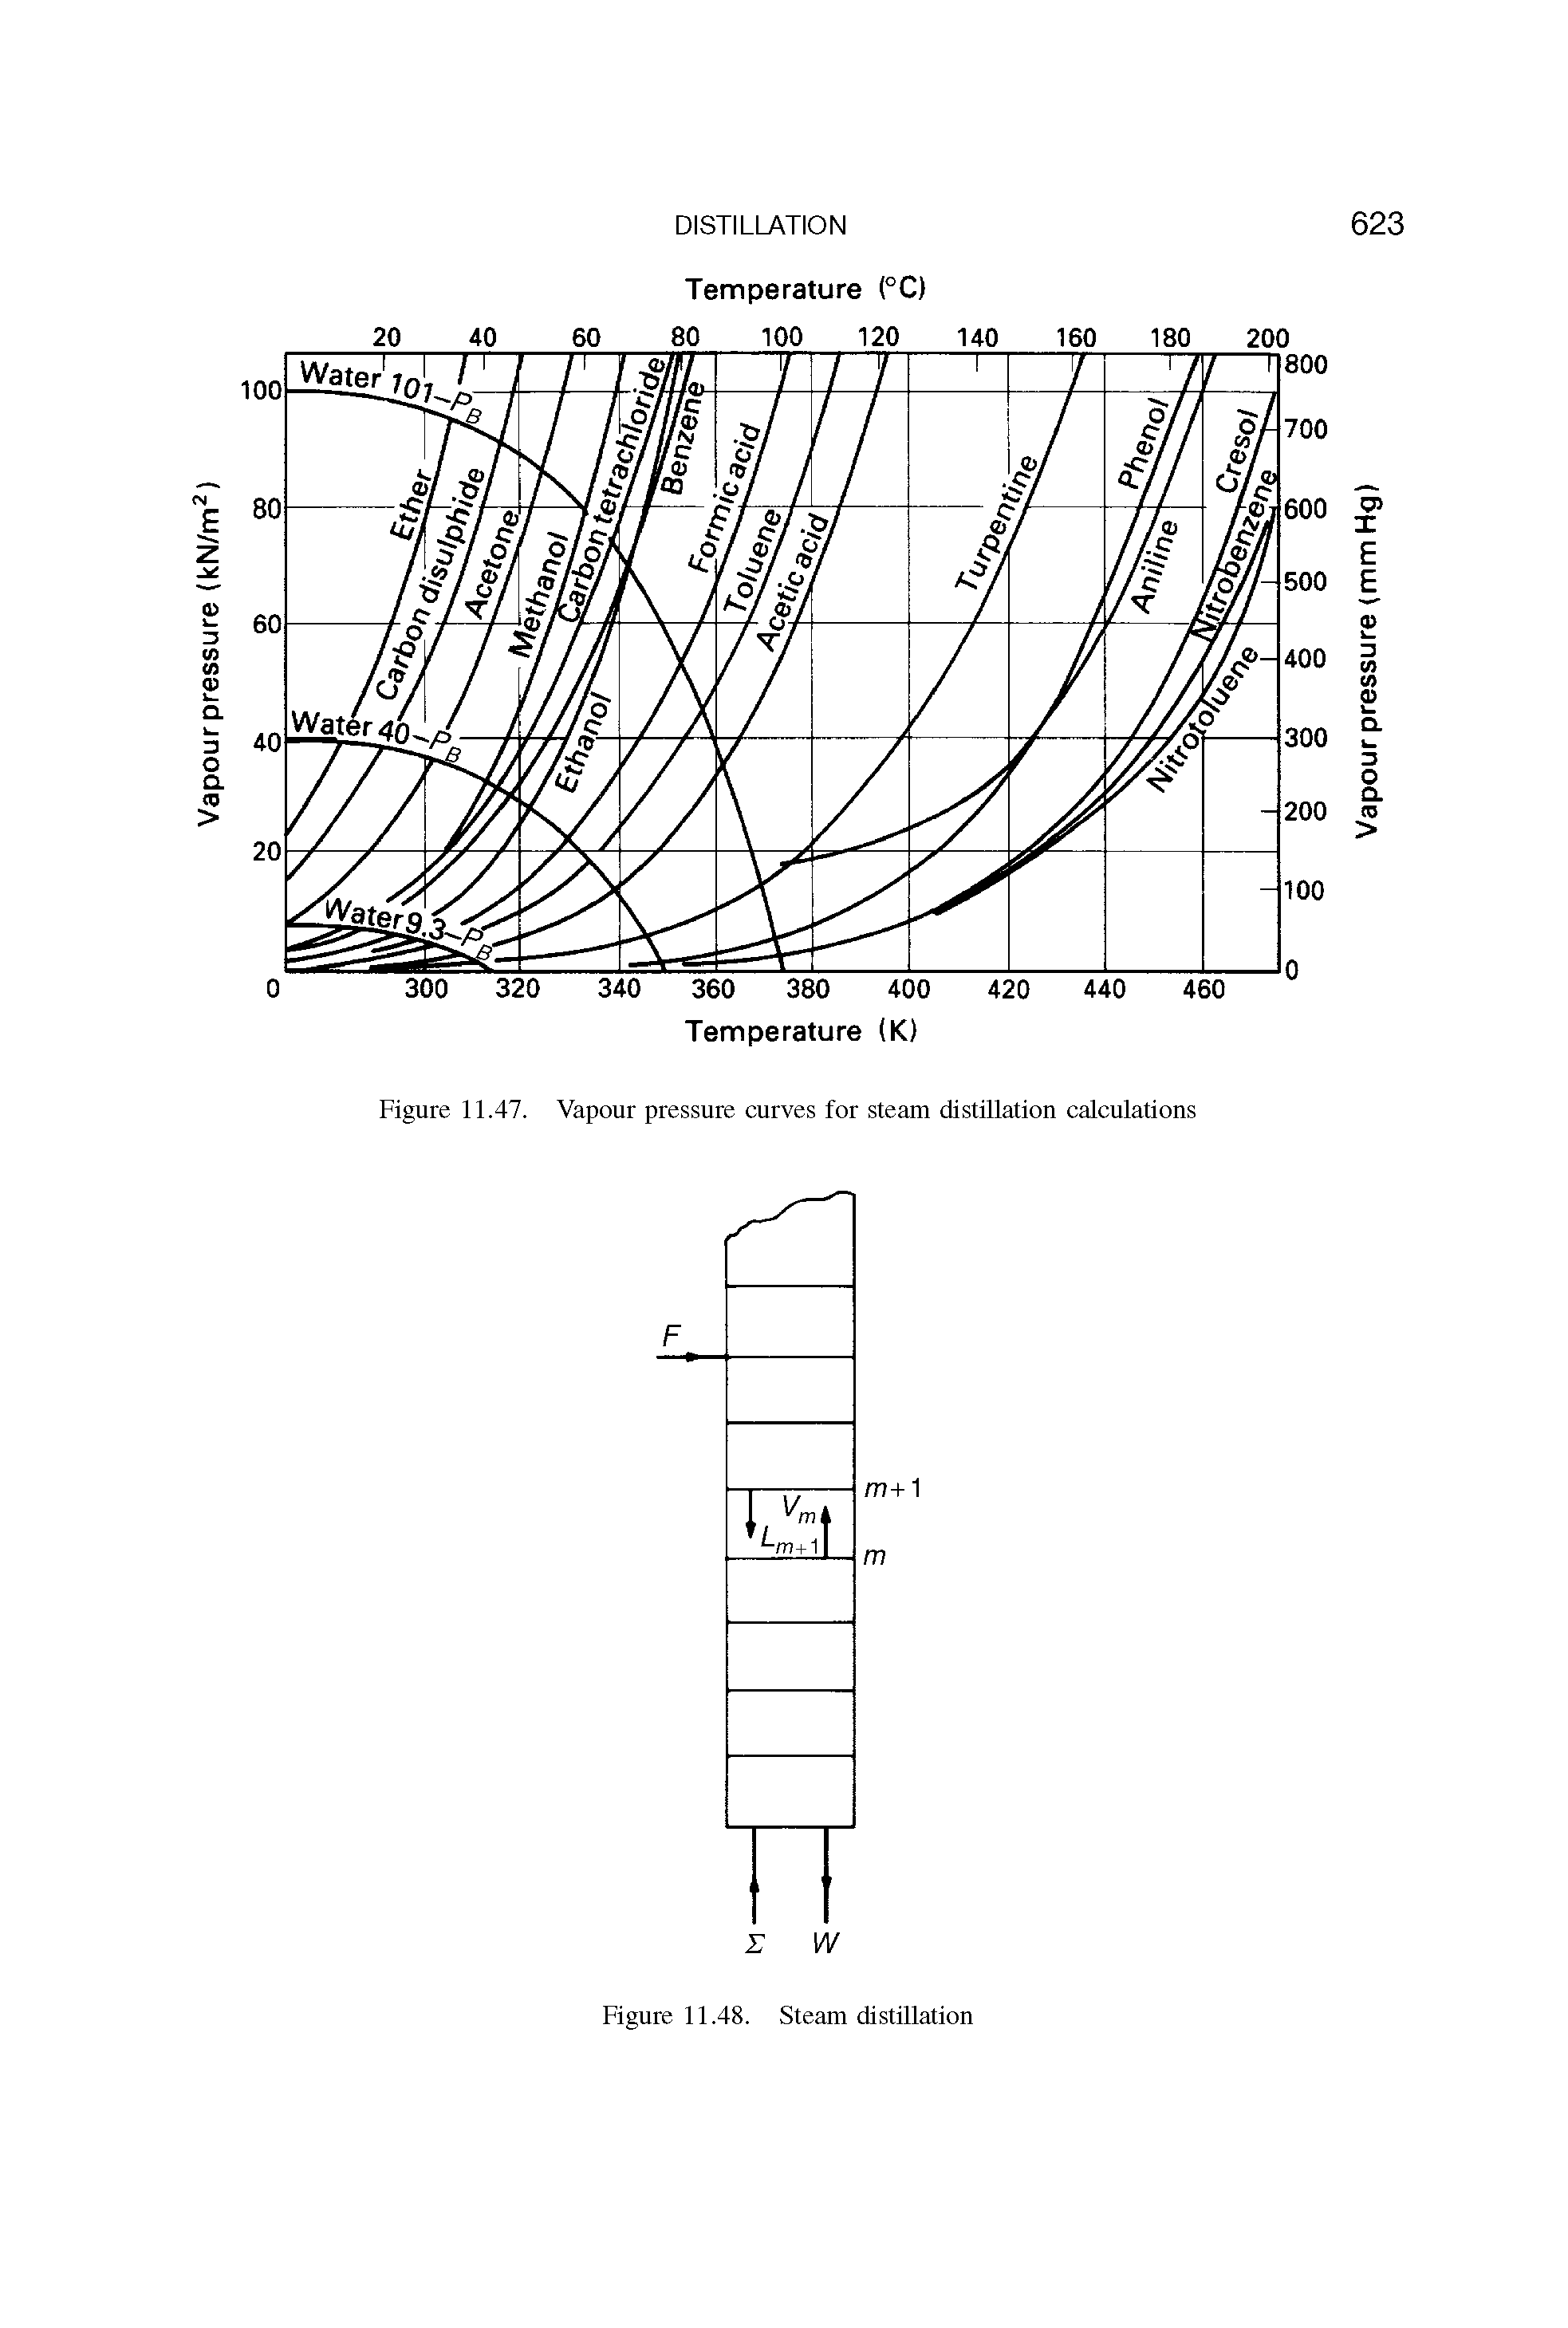 Figure 11.47. Vapour pressure curves for steam distillation calculations...